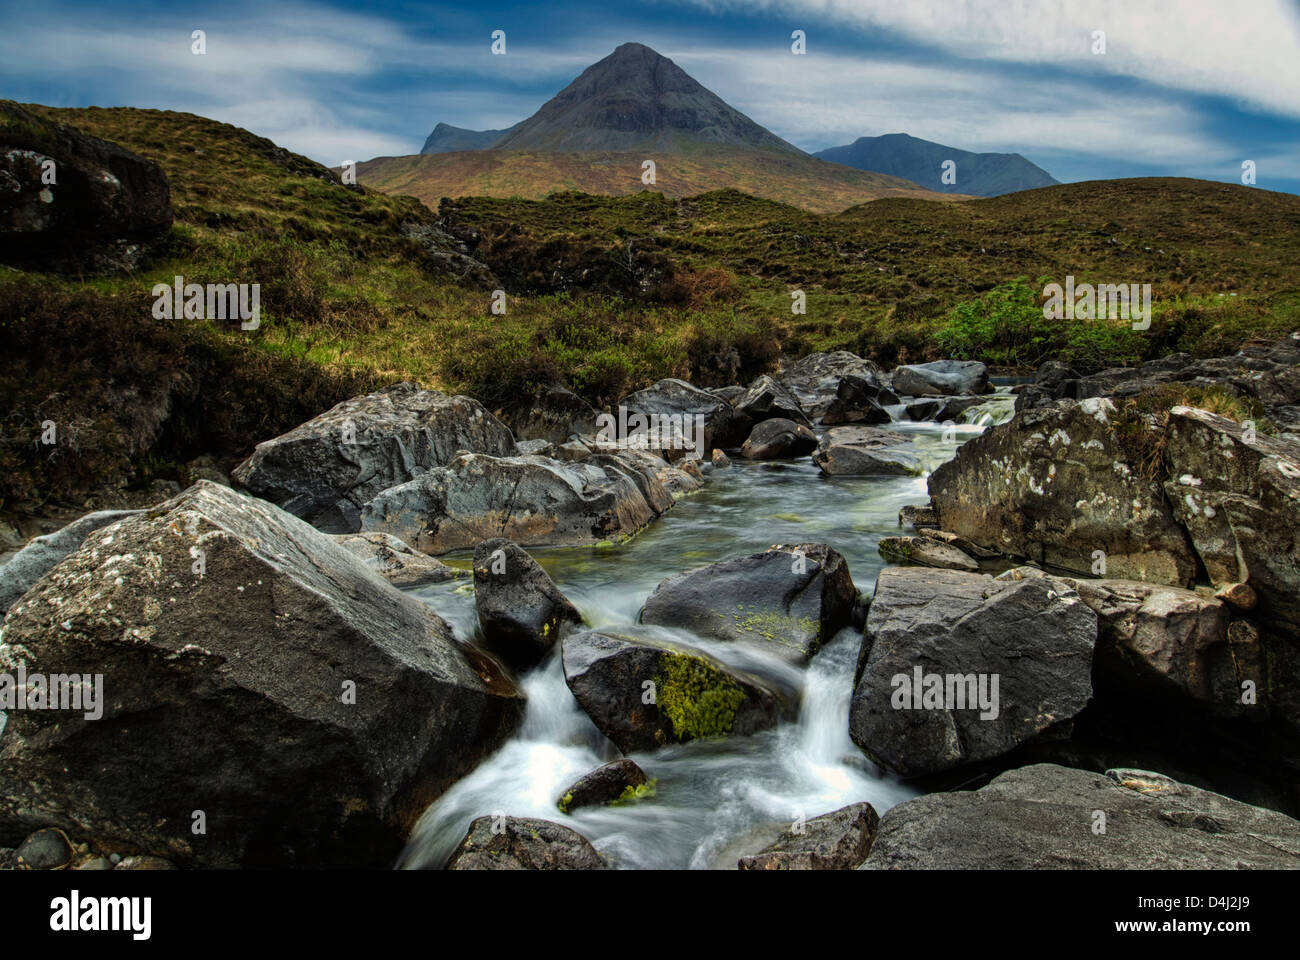 Waterfall in the Cuillin mountains, Isle of Skye, Scotland Stock Photo